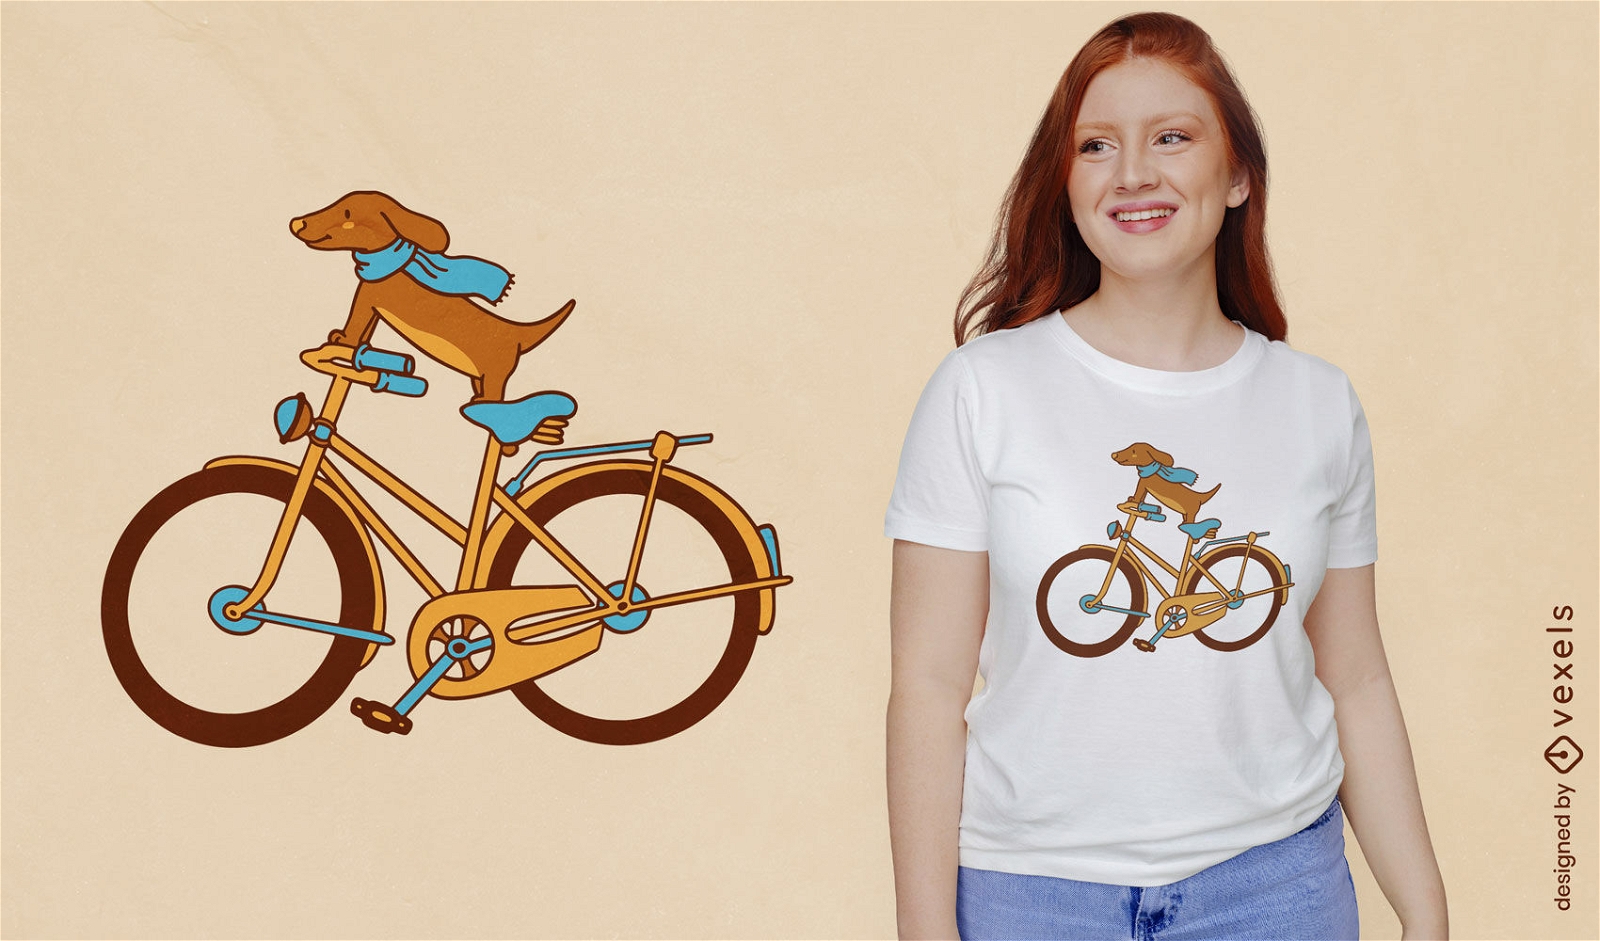 Dachshund dog cycling t-shirt design